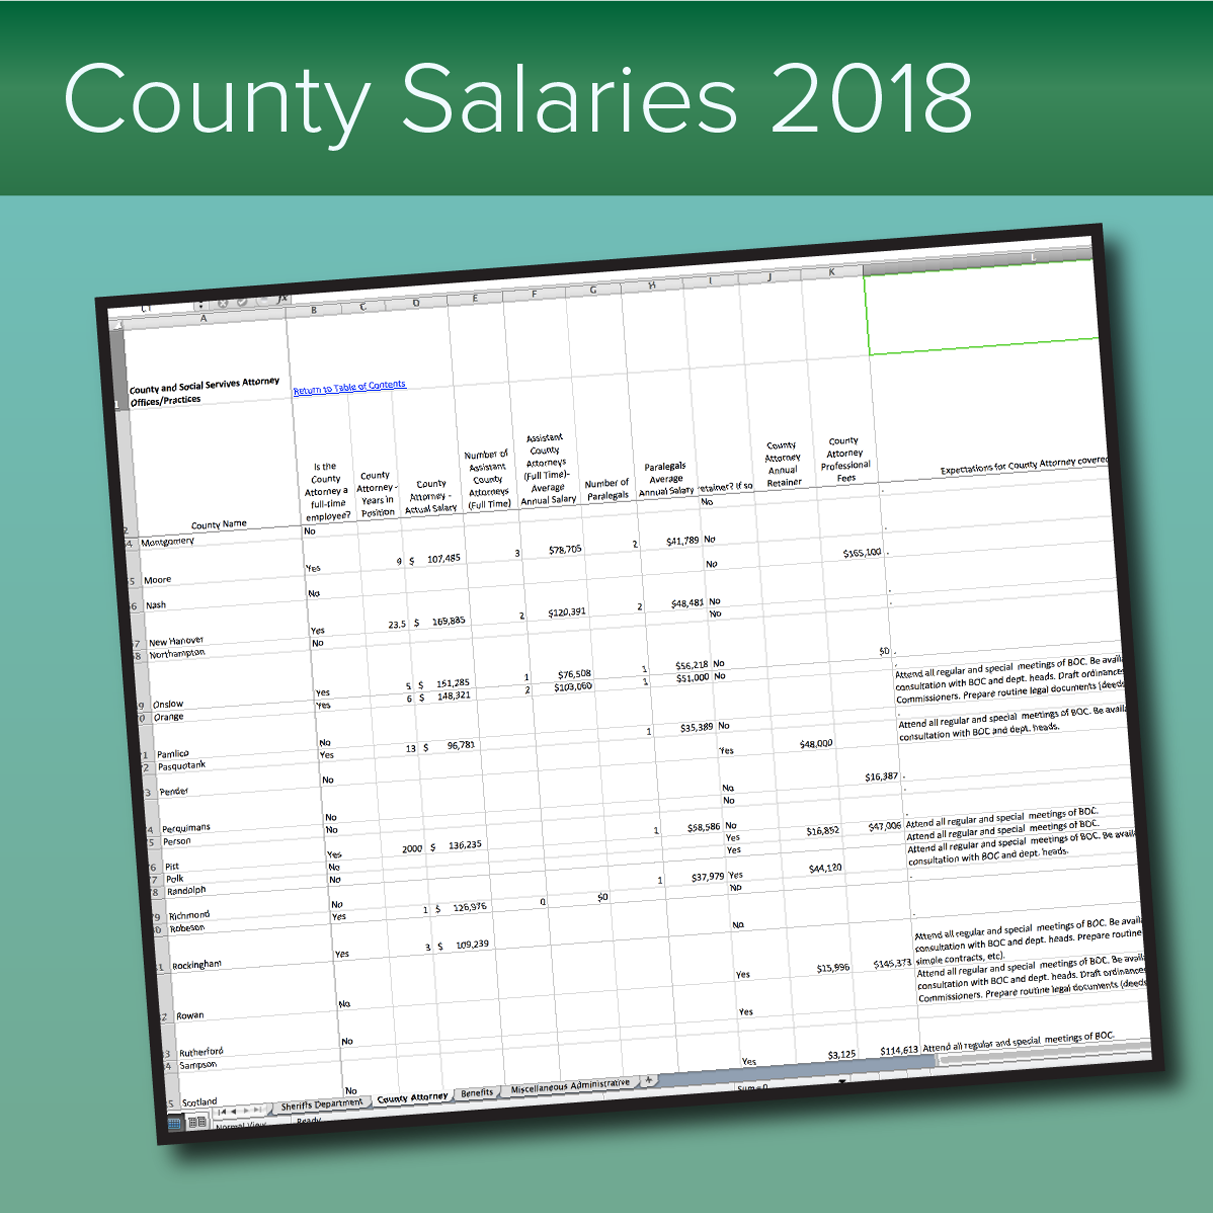 County salaries report, 2018